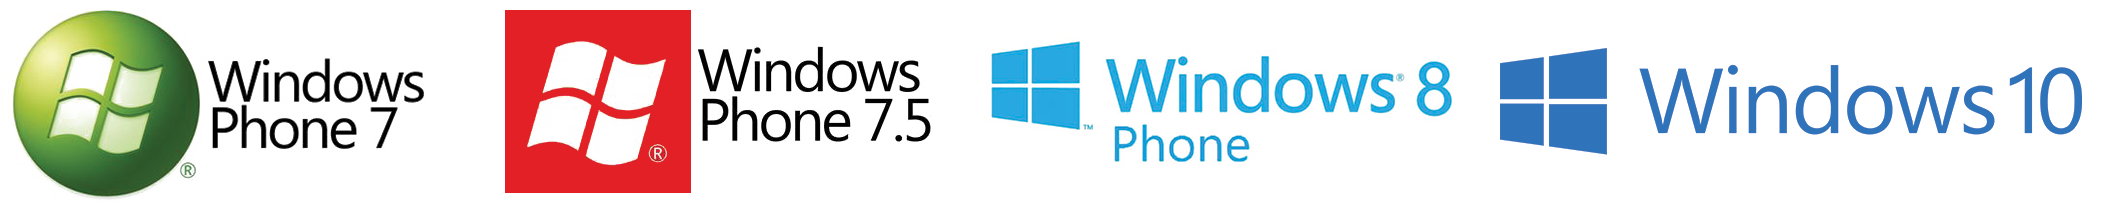 windows mobile logos